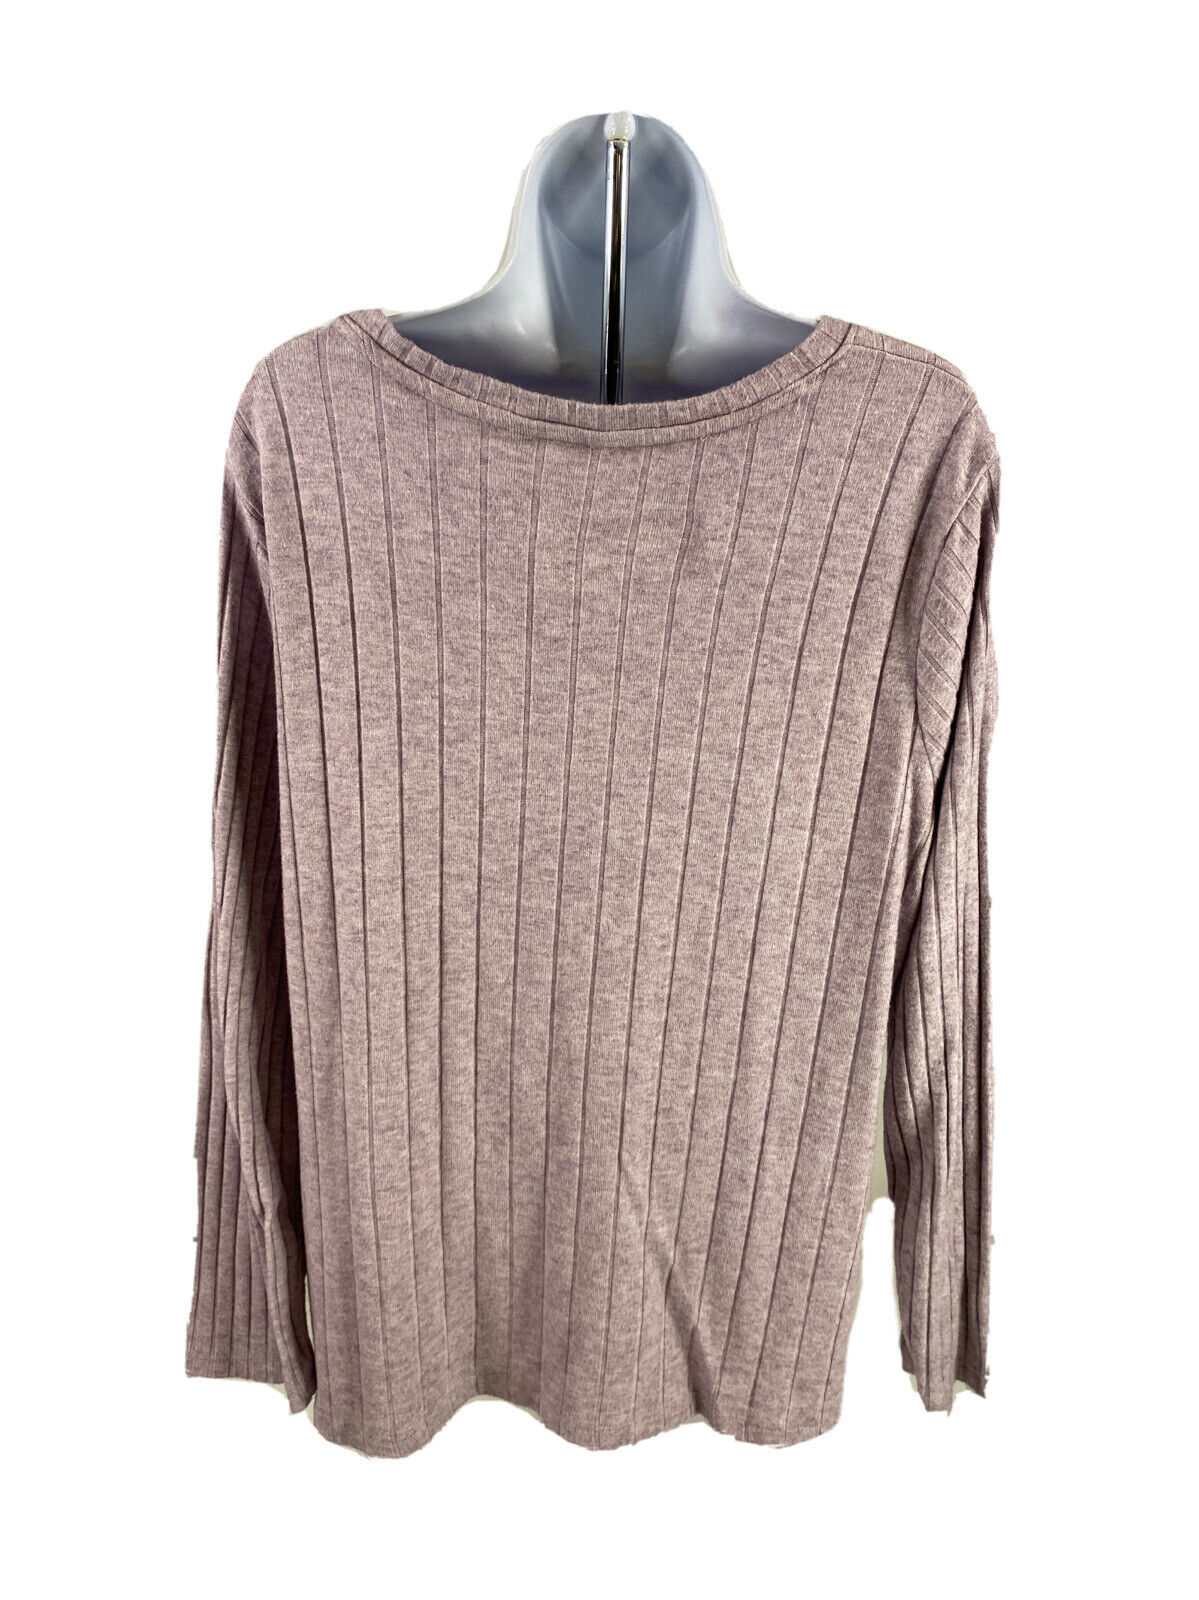 Simply Vera Wang Women's Purple Long Sleeve Knit Sweater - XXL